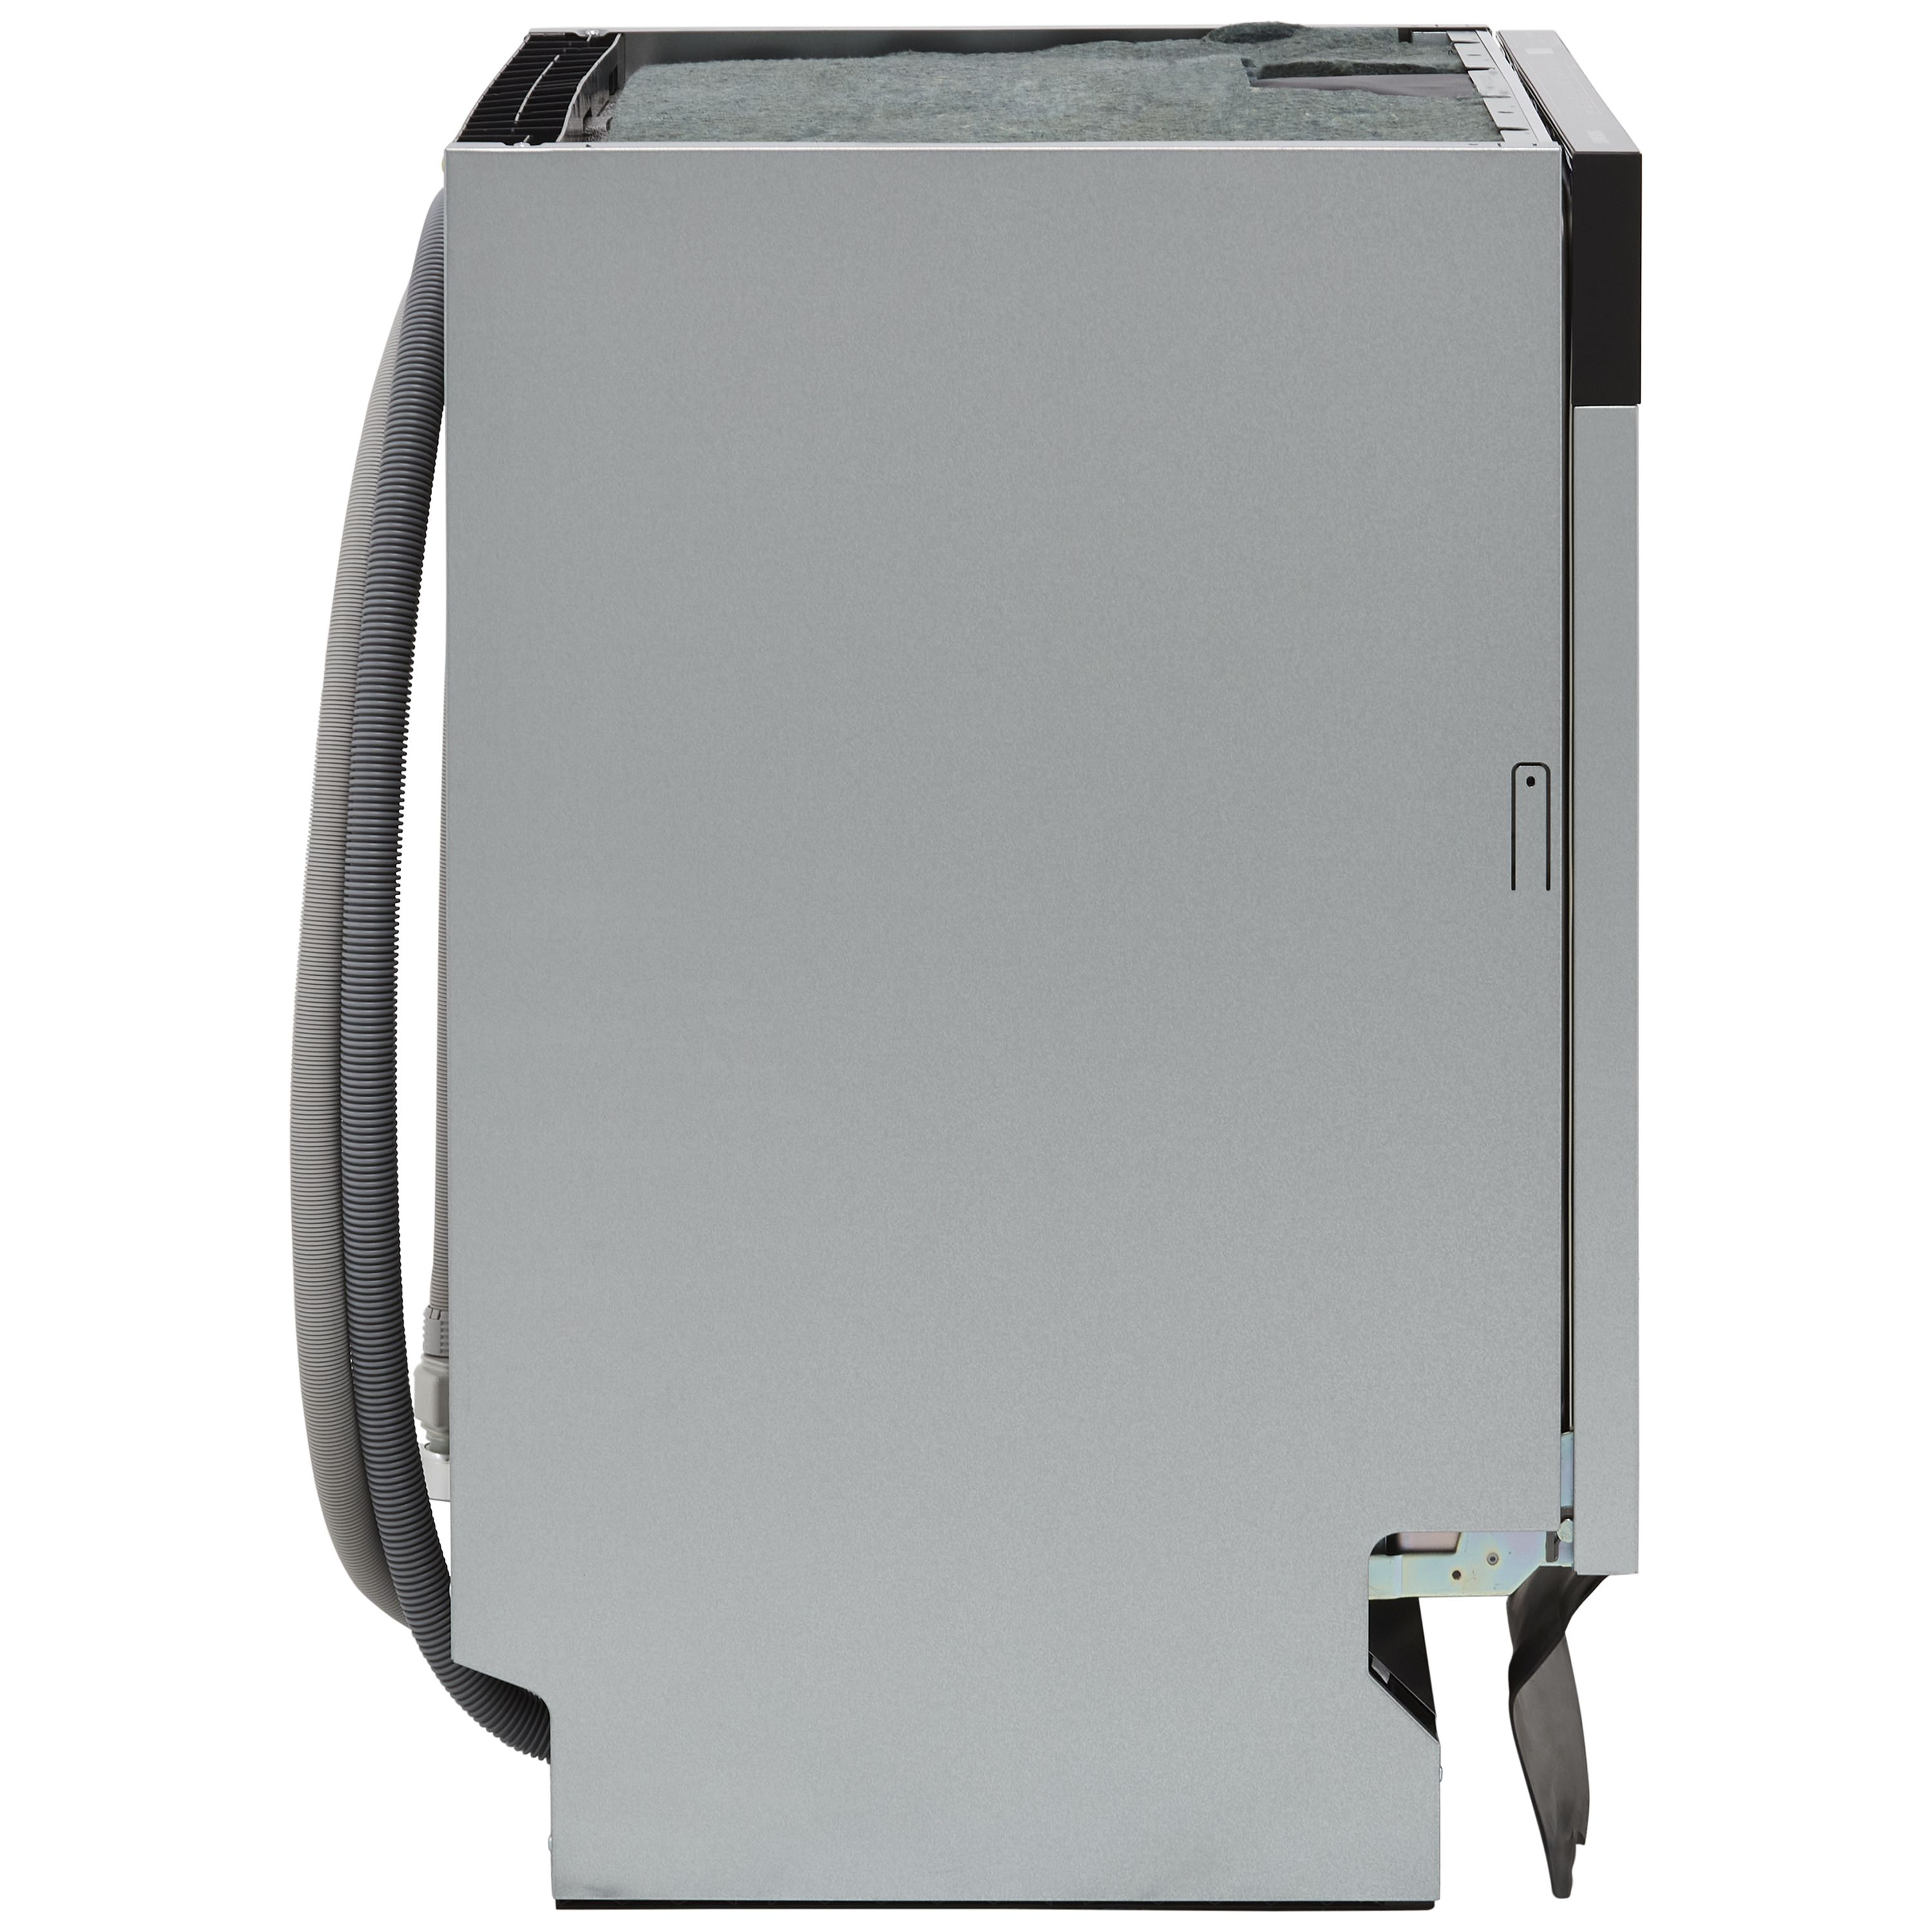 Samsung DW60A8060BB_BK Integrated Full size Dishwasher - Black